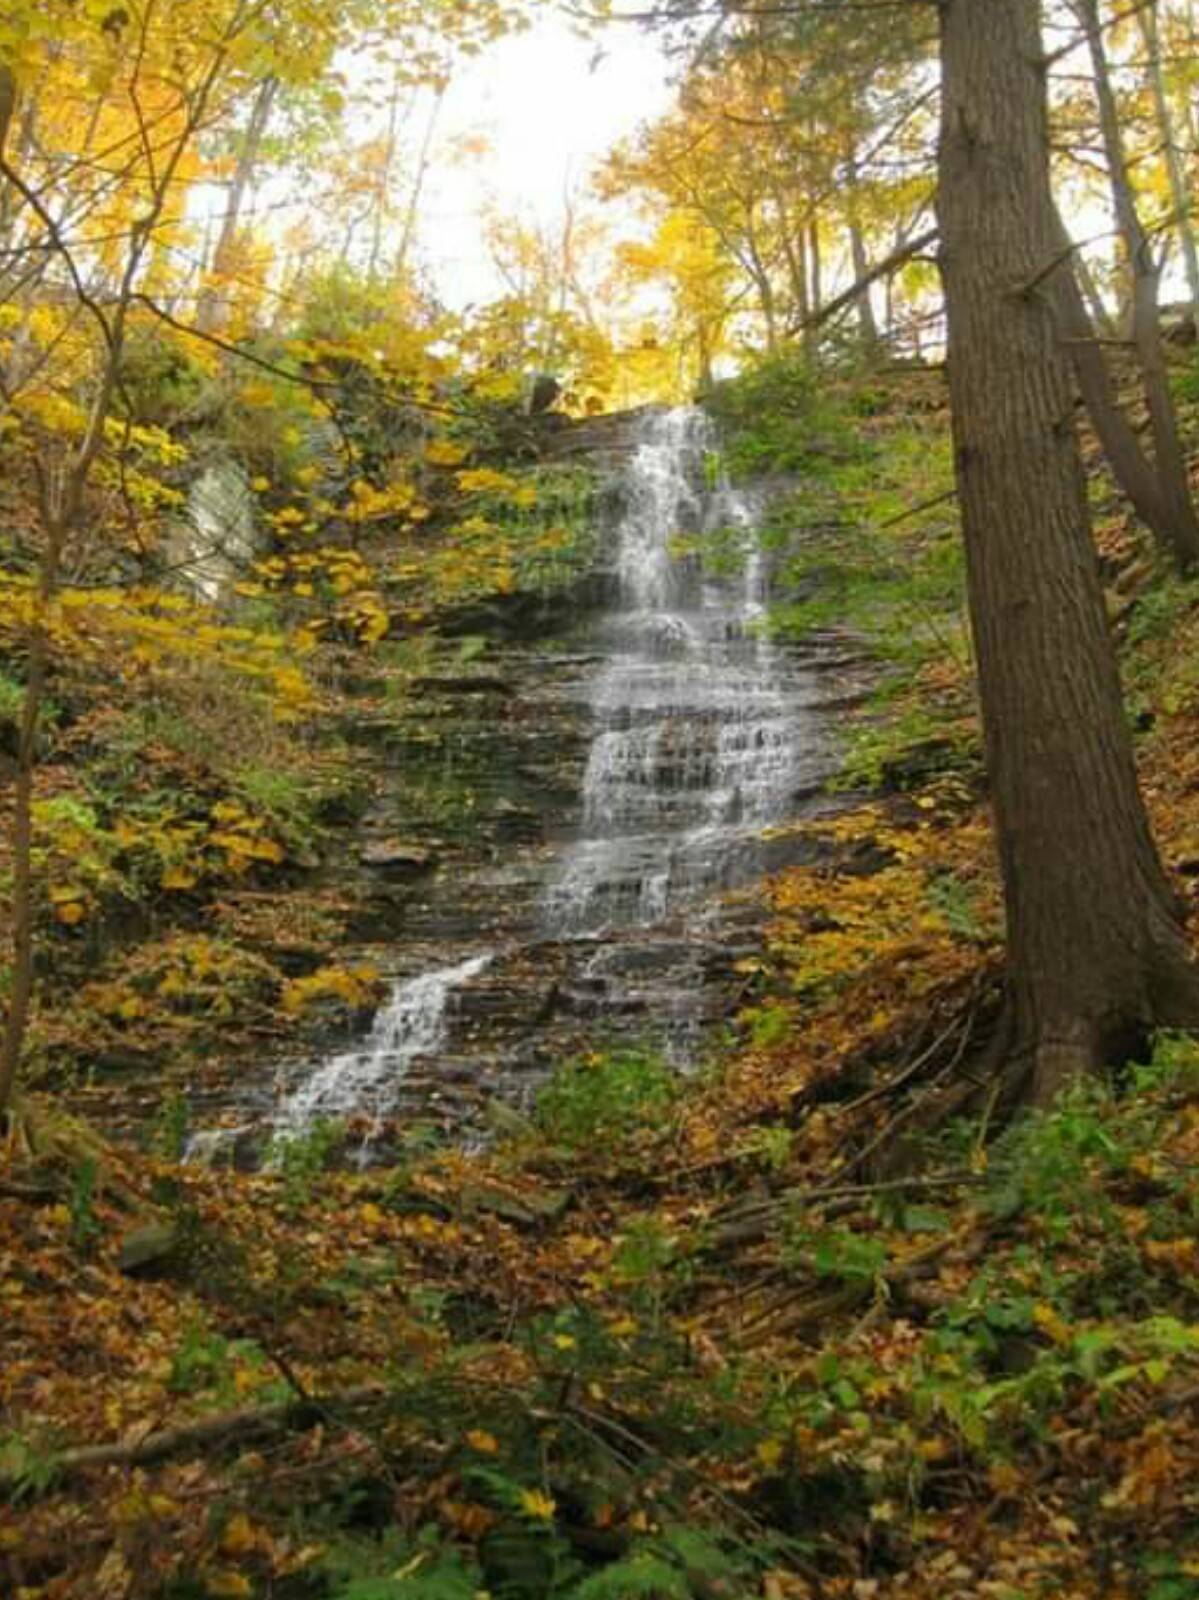 Nature scenes and waterfall photography around the mountainous region